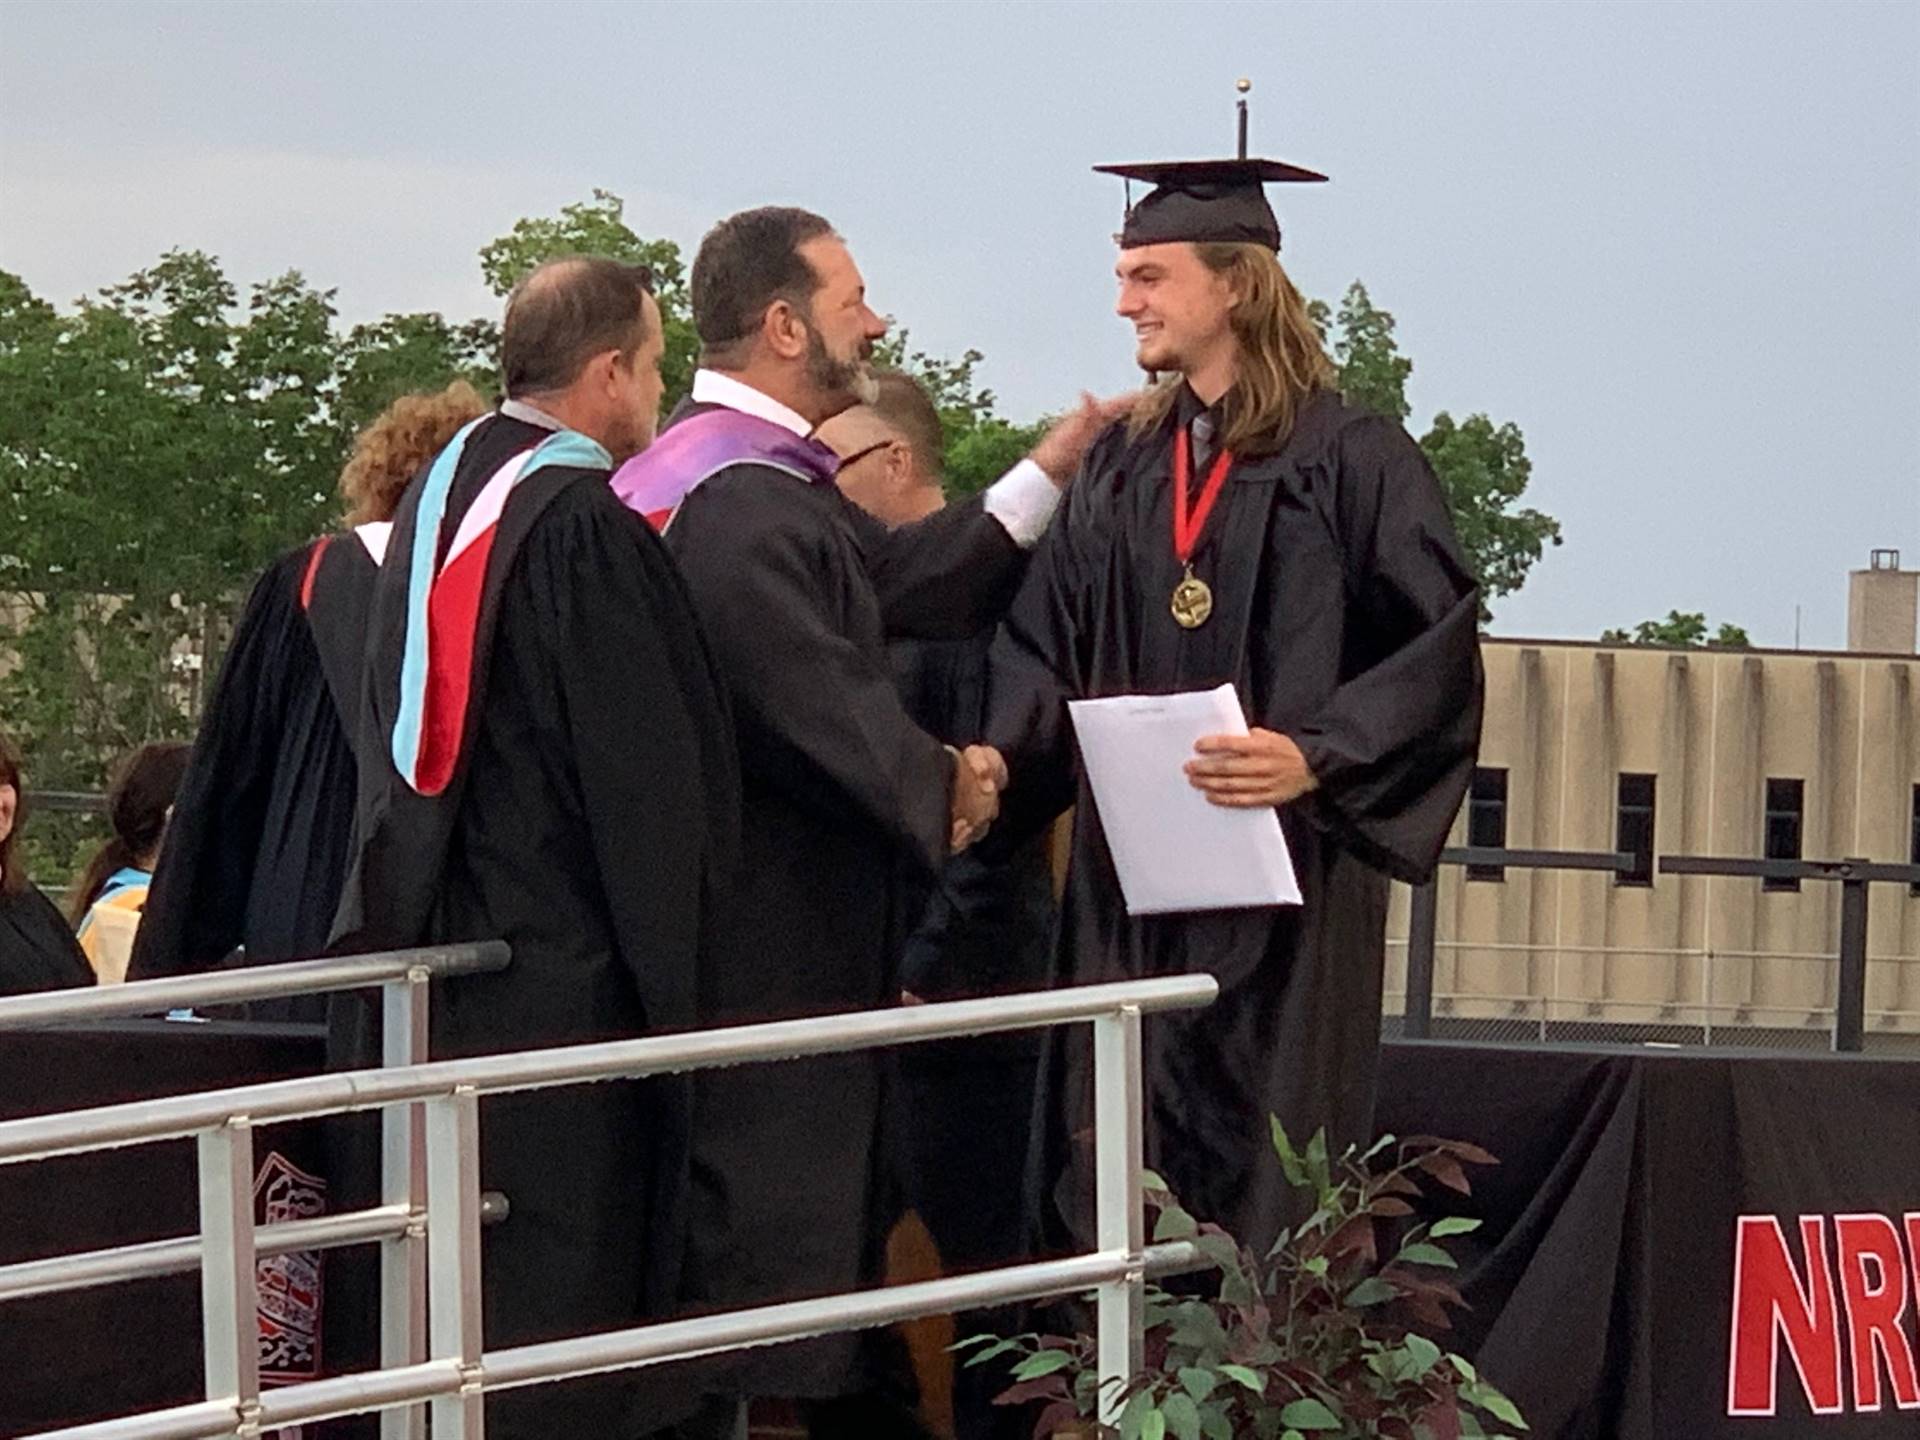 Salutatorian receiving recognition at graduation